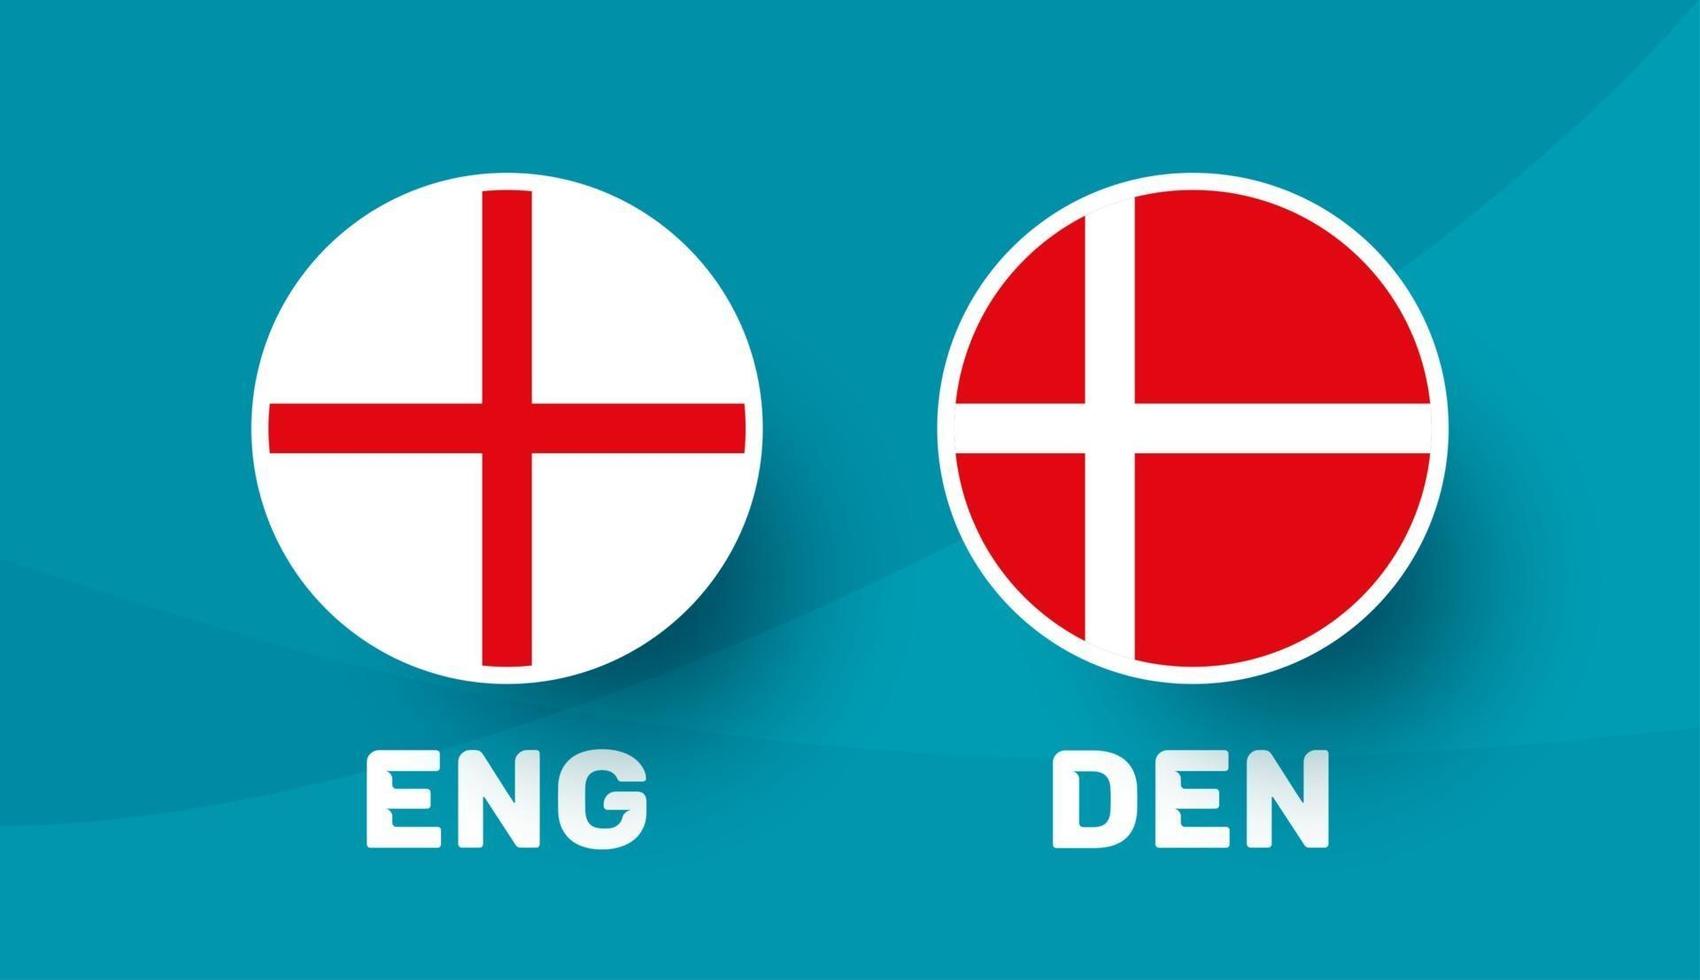 Angleterre vs Danemark match illustration vectorielle championnat de football 2020 vecteur